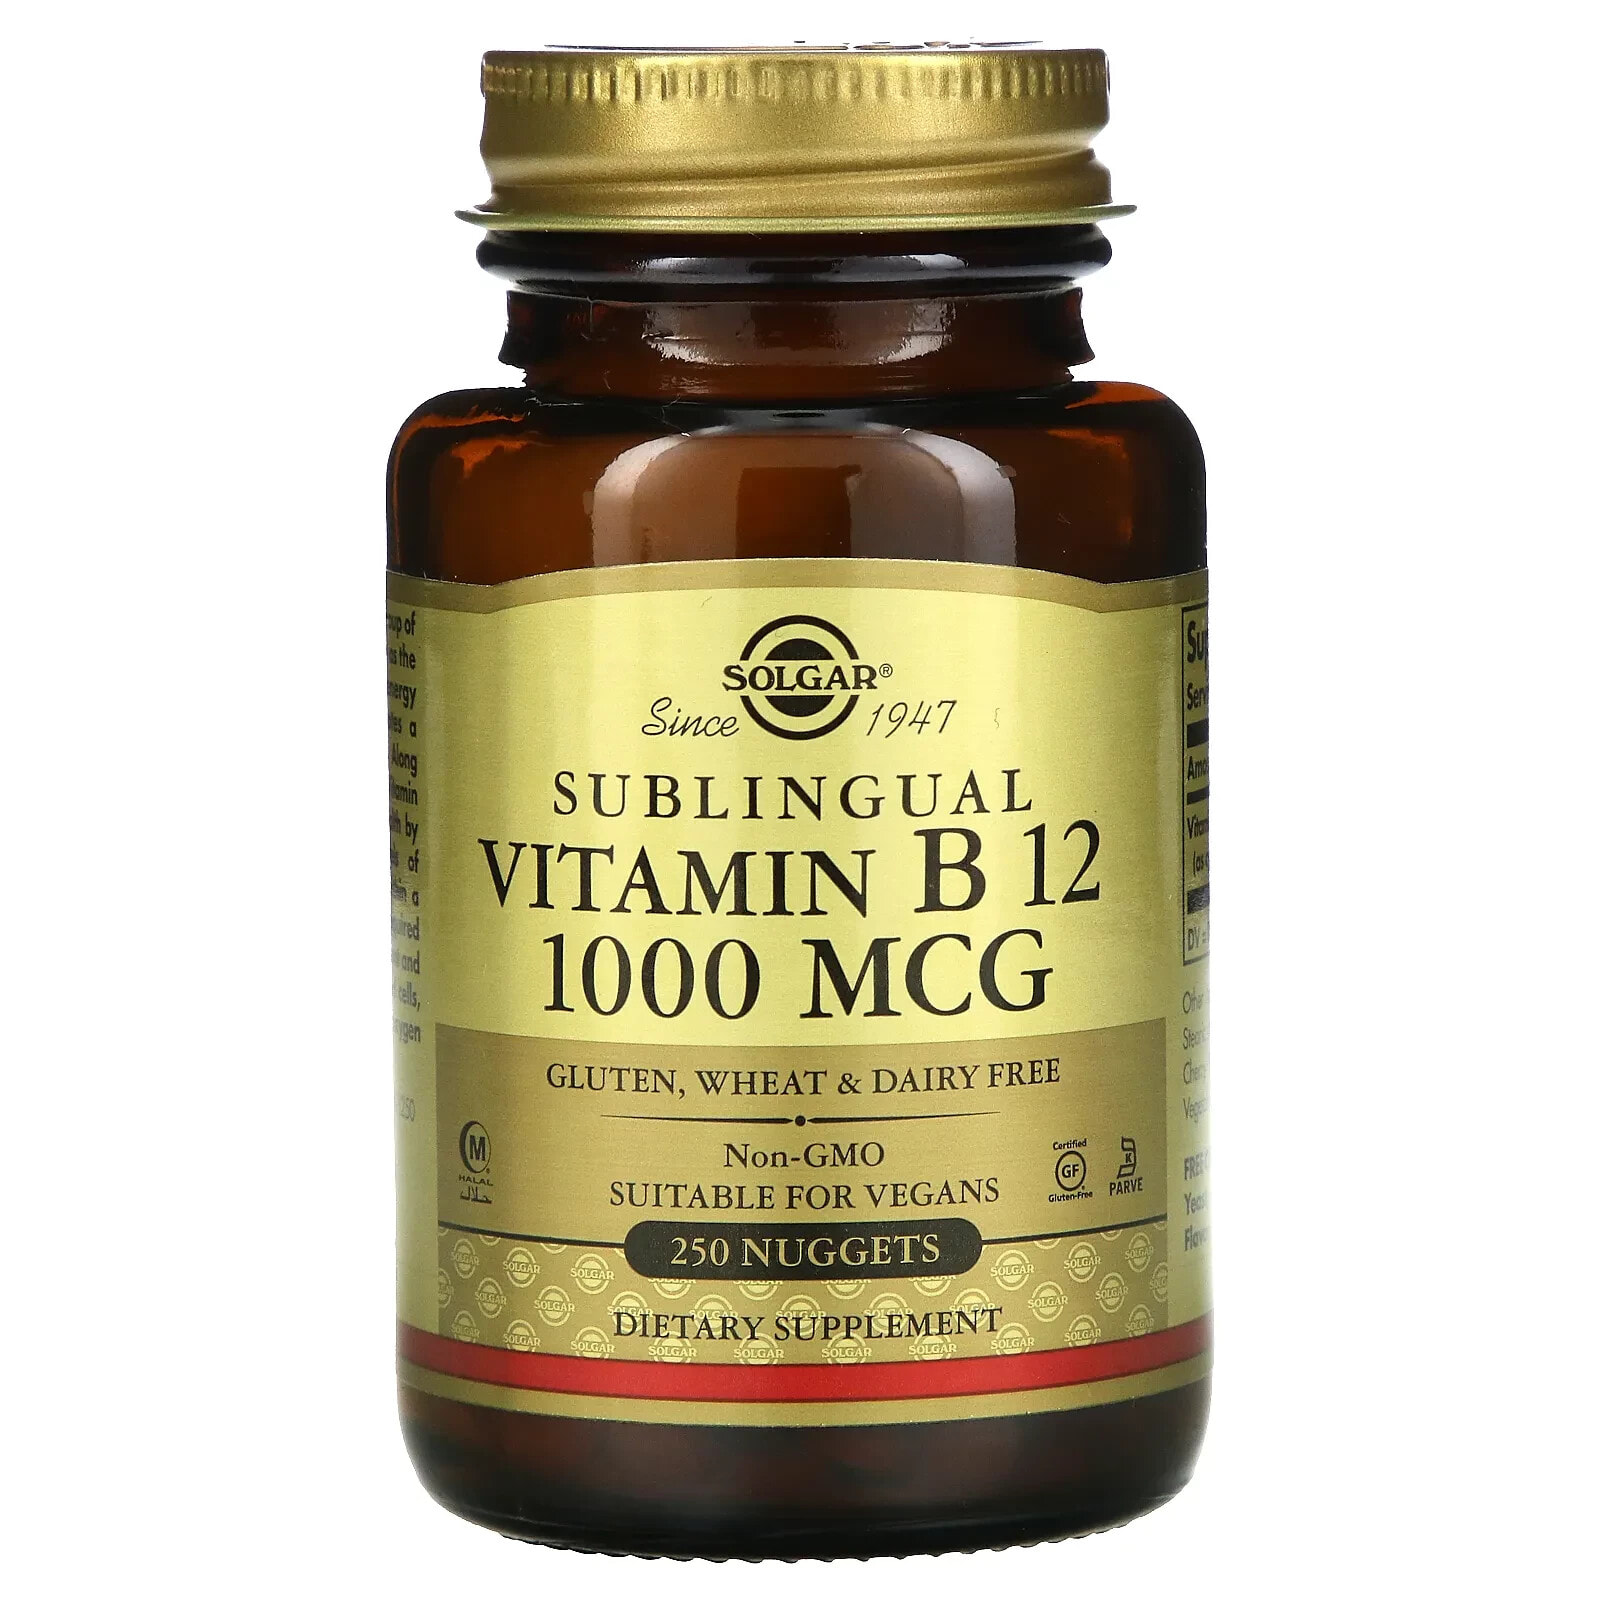 Sublingual Vitamin B12, 1,000 mcg, 250 Nuggets